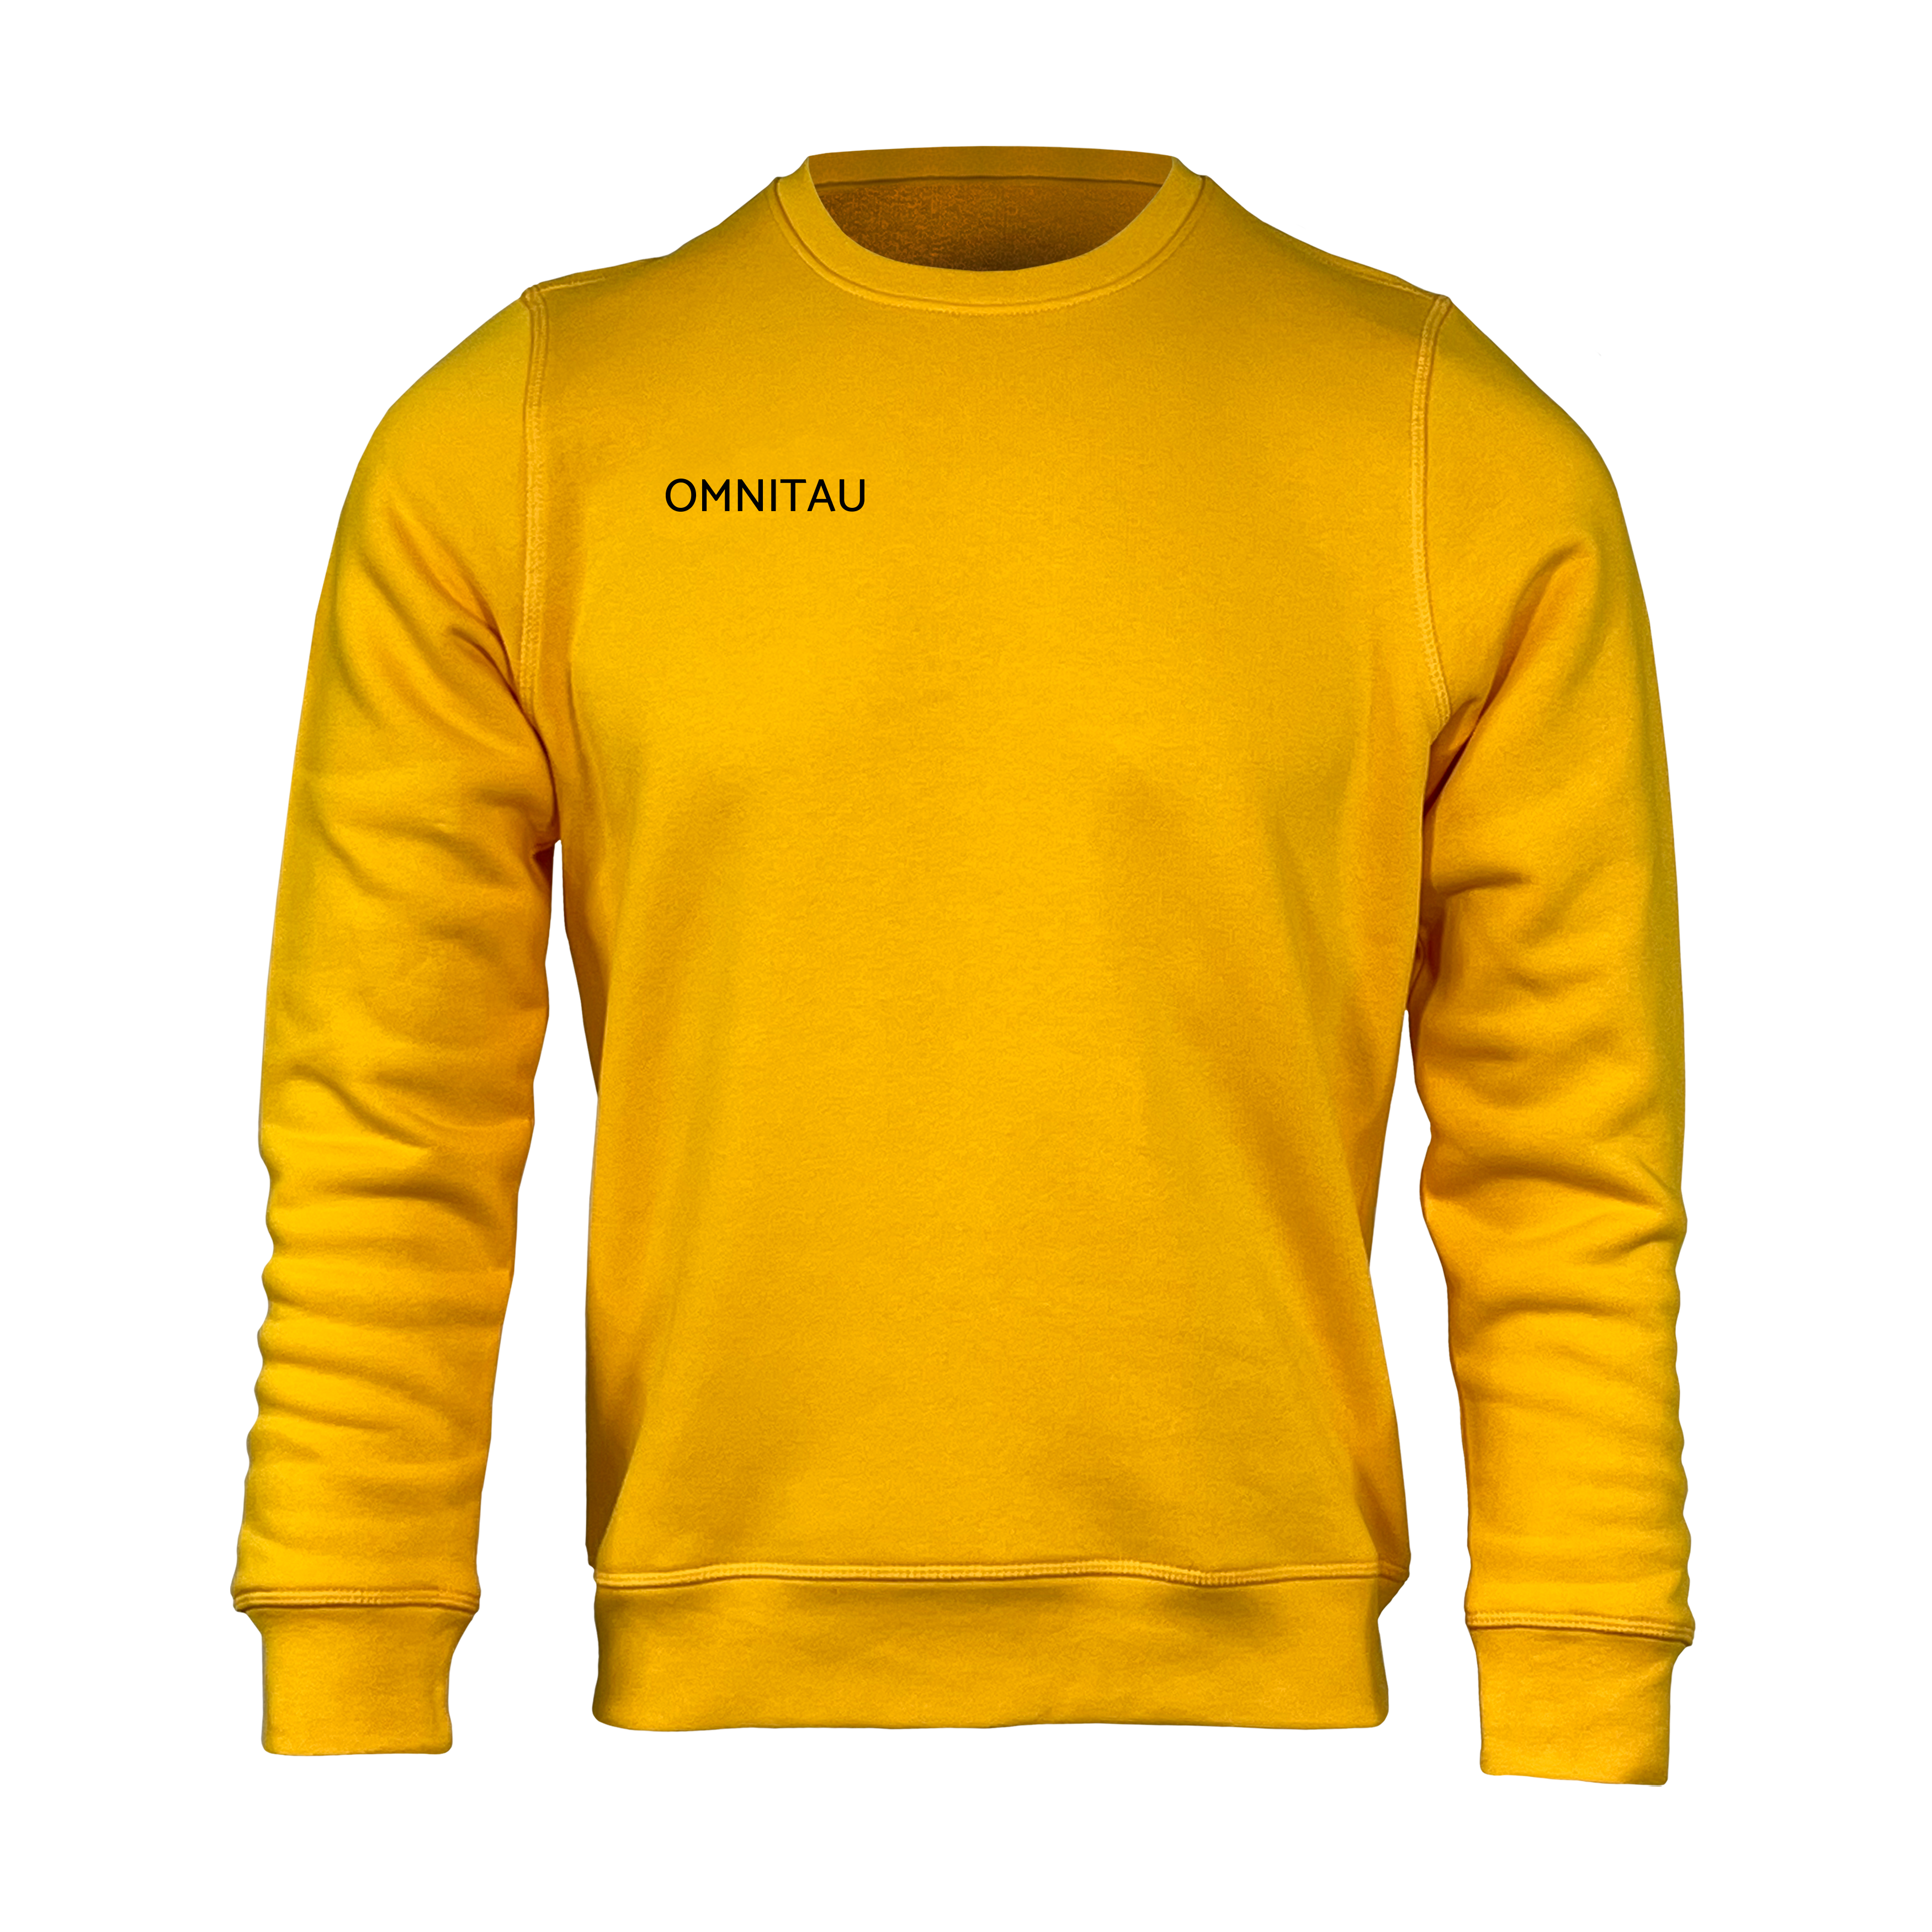 Omnitau Kid's Team Sports Organic Cotton Sweatshirt - Yellow